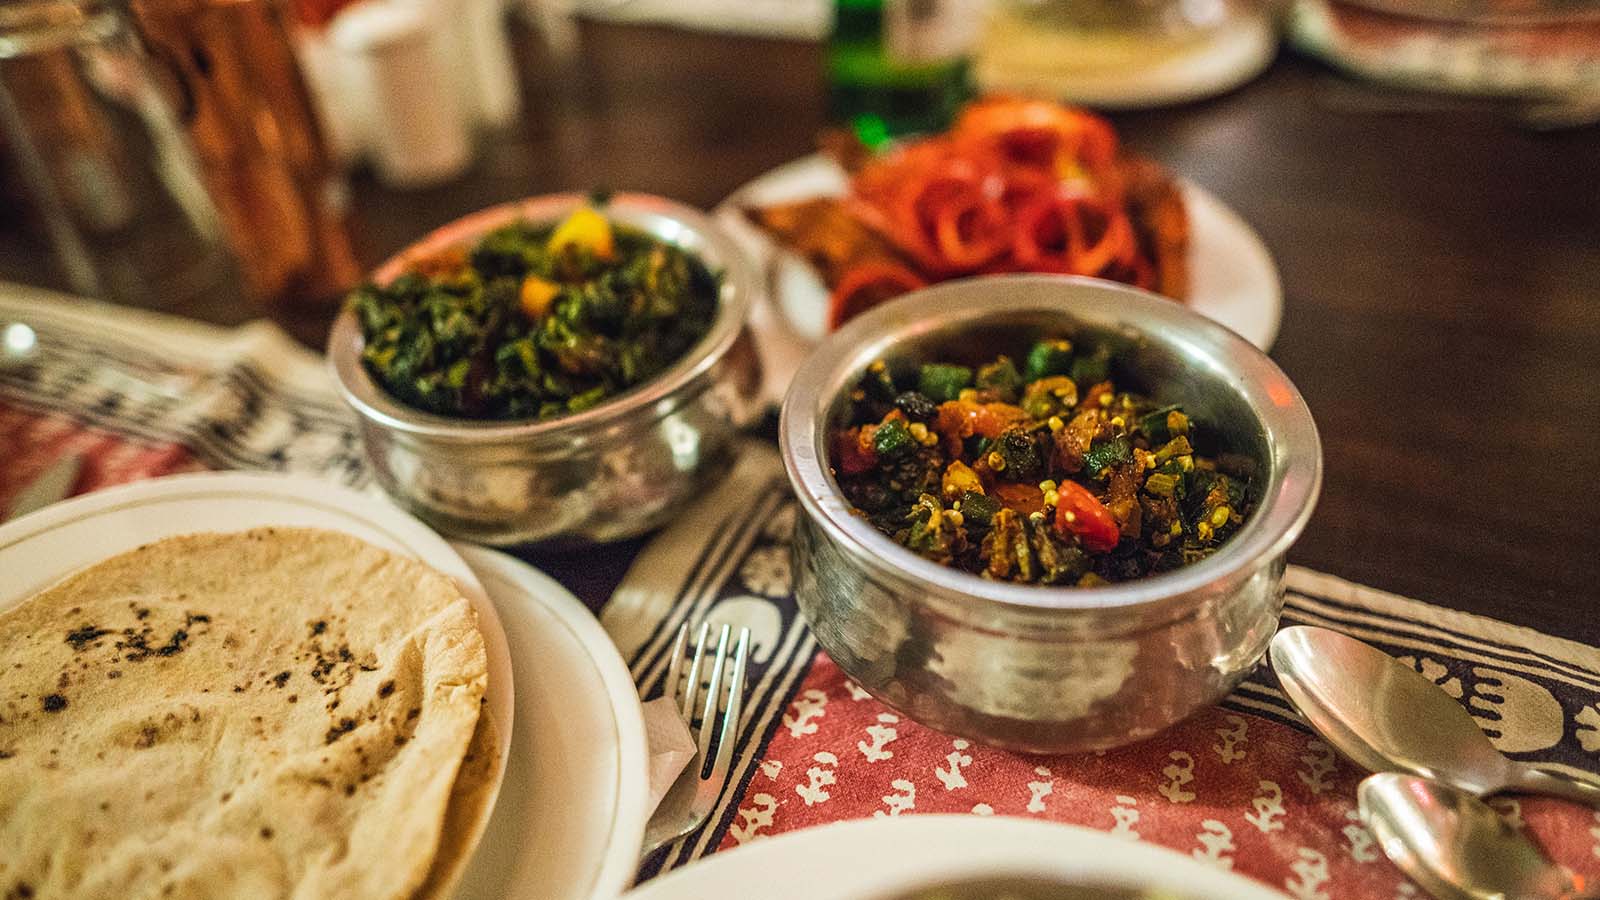 Jaipur is one stop on Intrepid Travel’s India Vegan Food Adventure | Food getaways to take this year